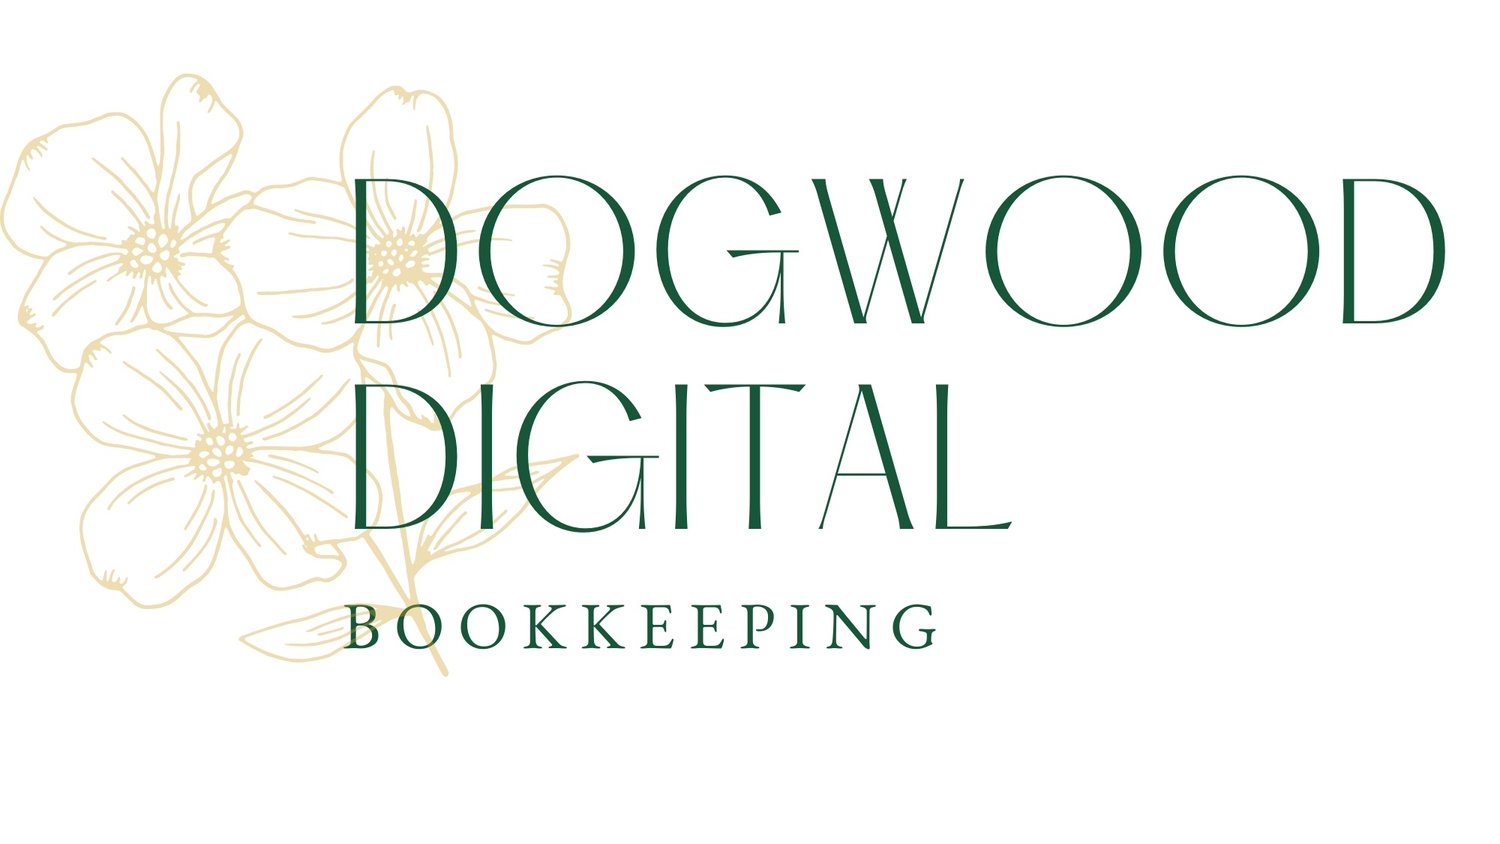 Dogwood Digital Bookkeeping